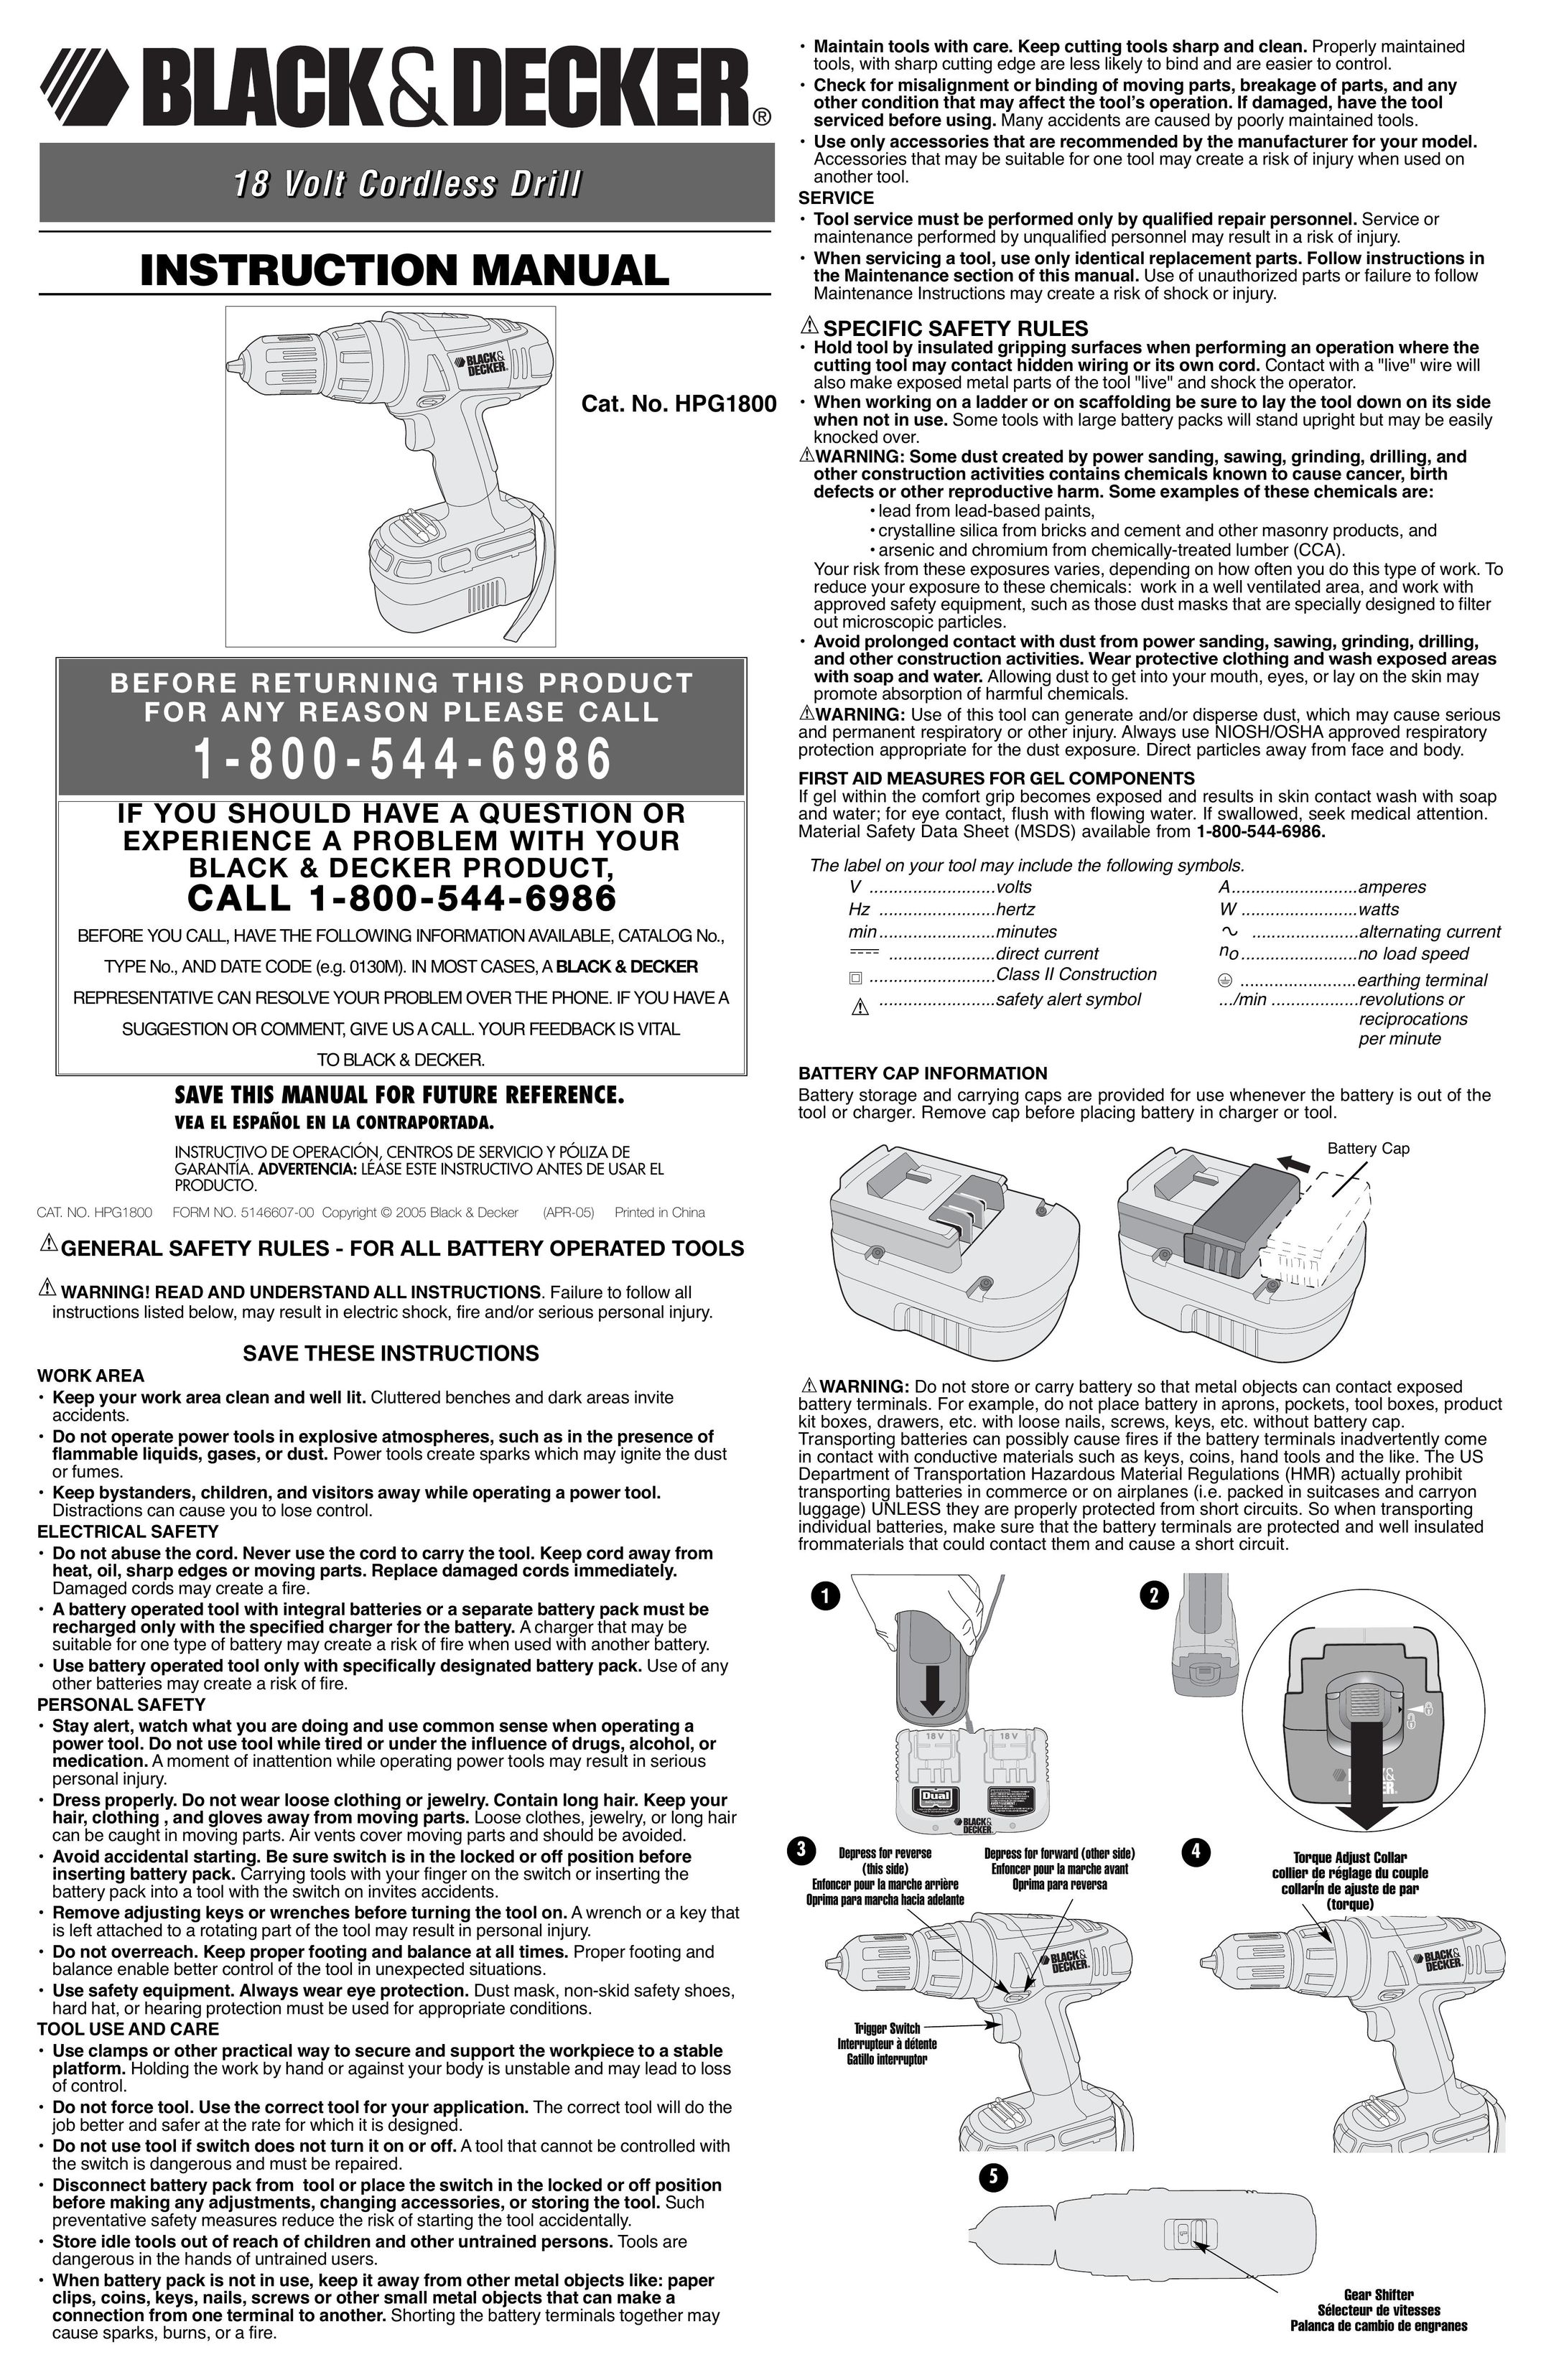 Black & Decker 5146607-00 Cordless Drill User Manual